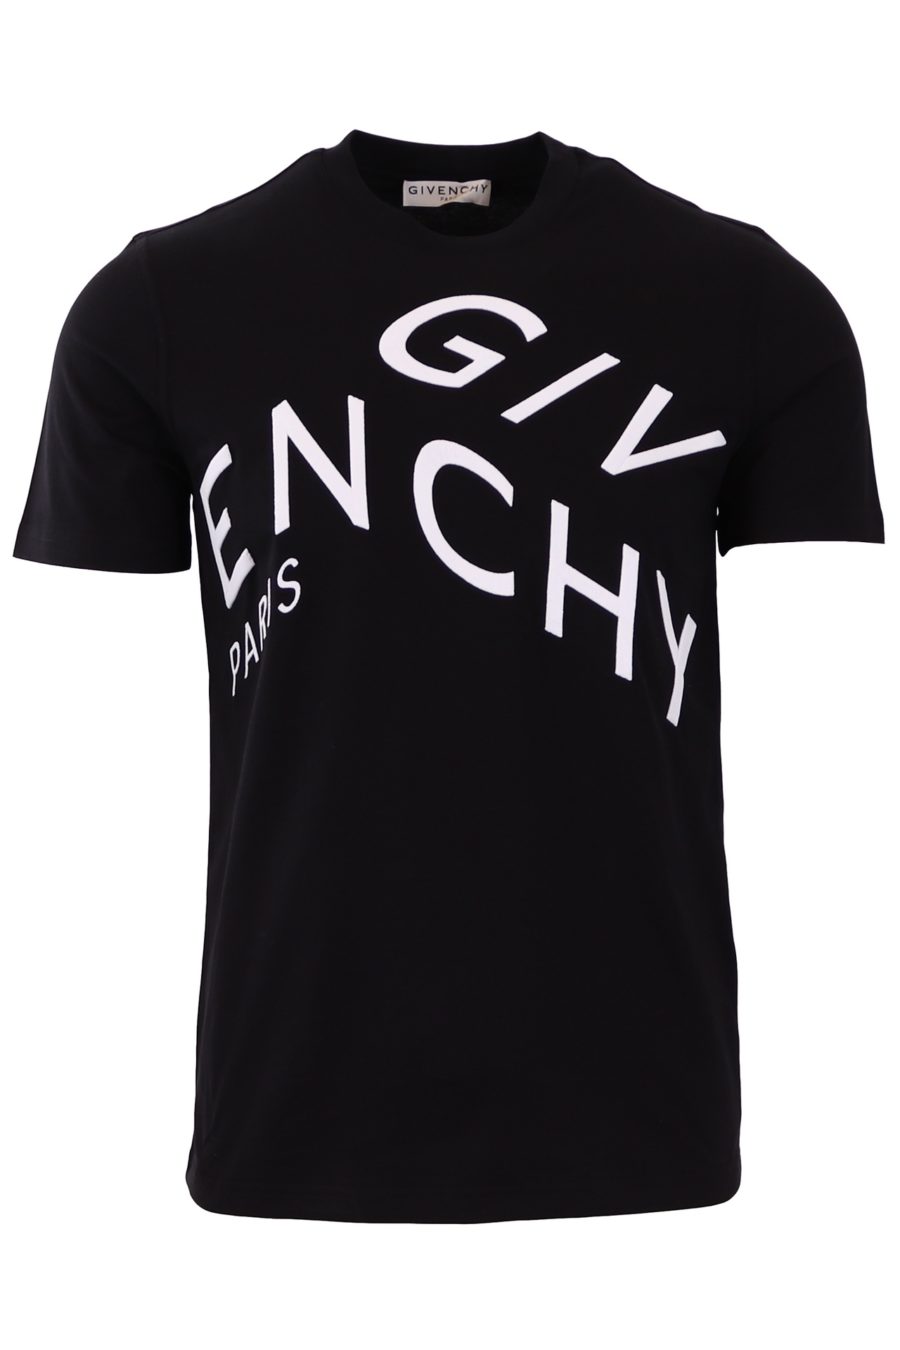 Givenchy T-shirt black slim fit embroidered logo - cf4733a05eb4e06fb4b130d0789d14d313ff3d55